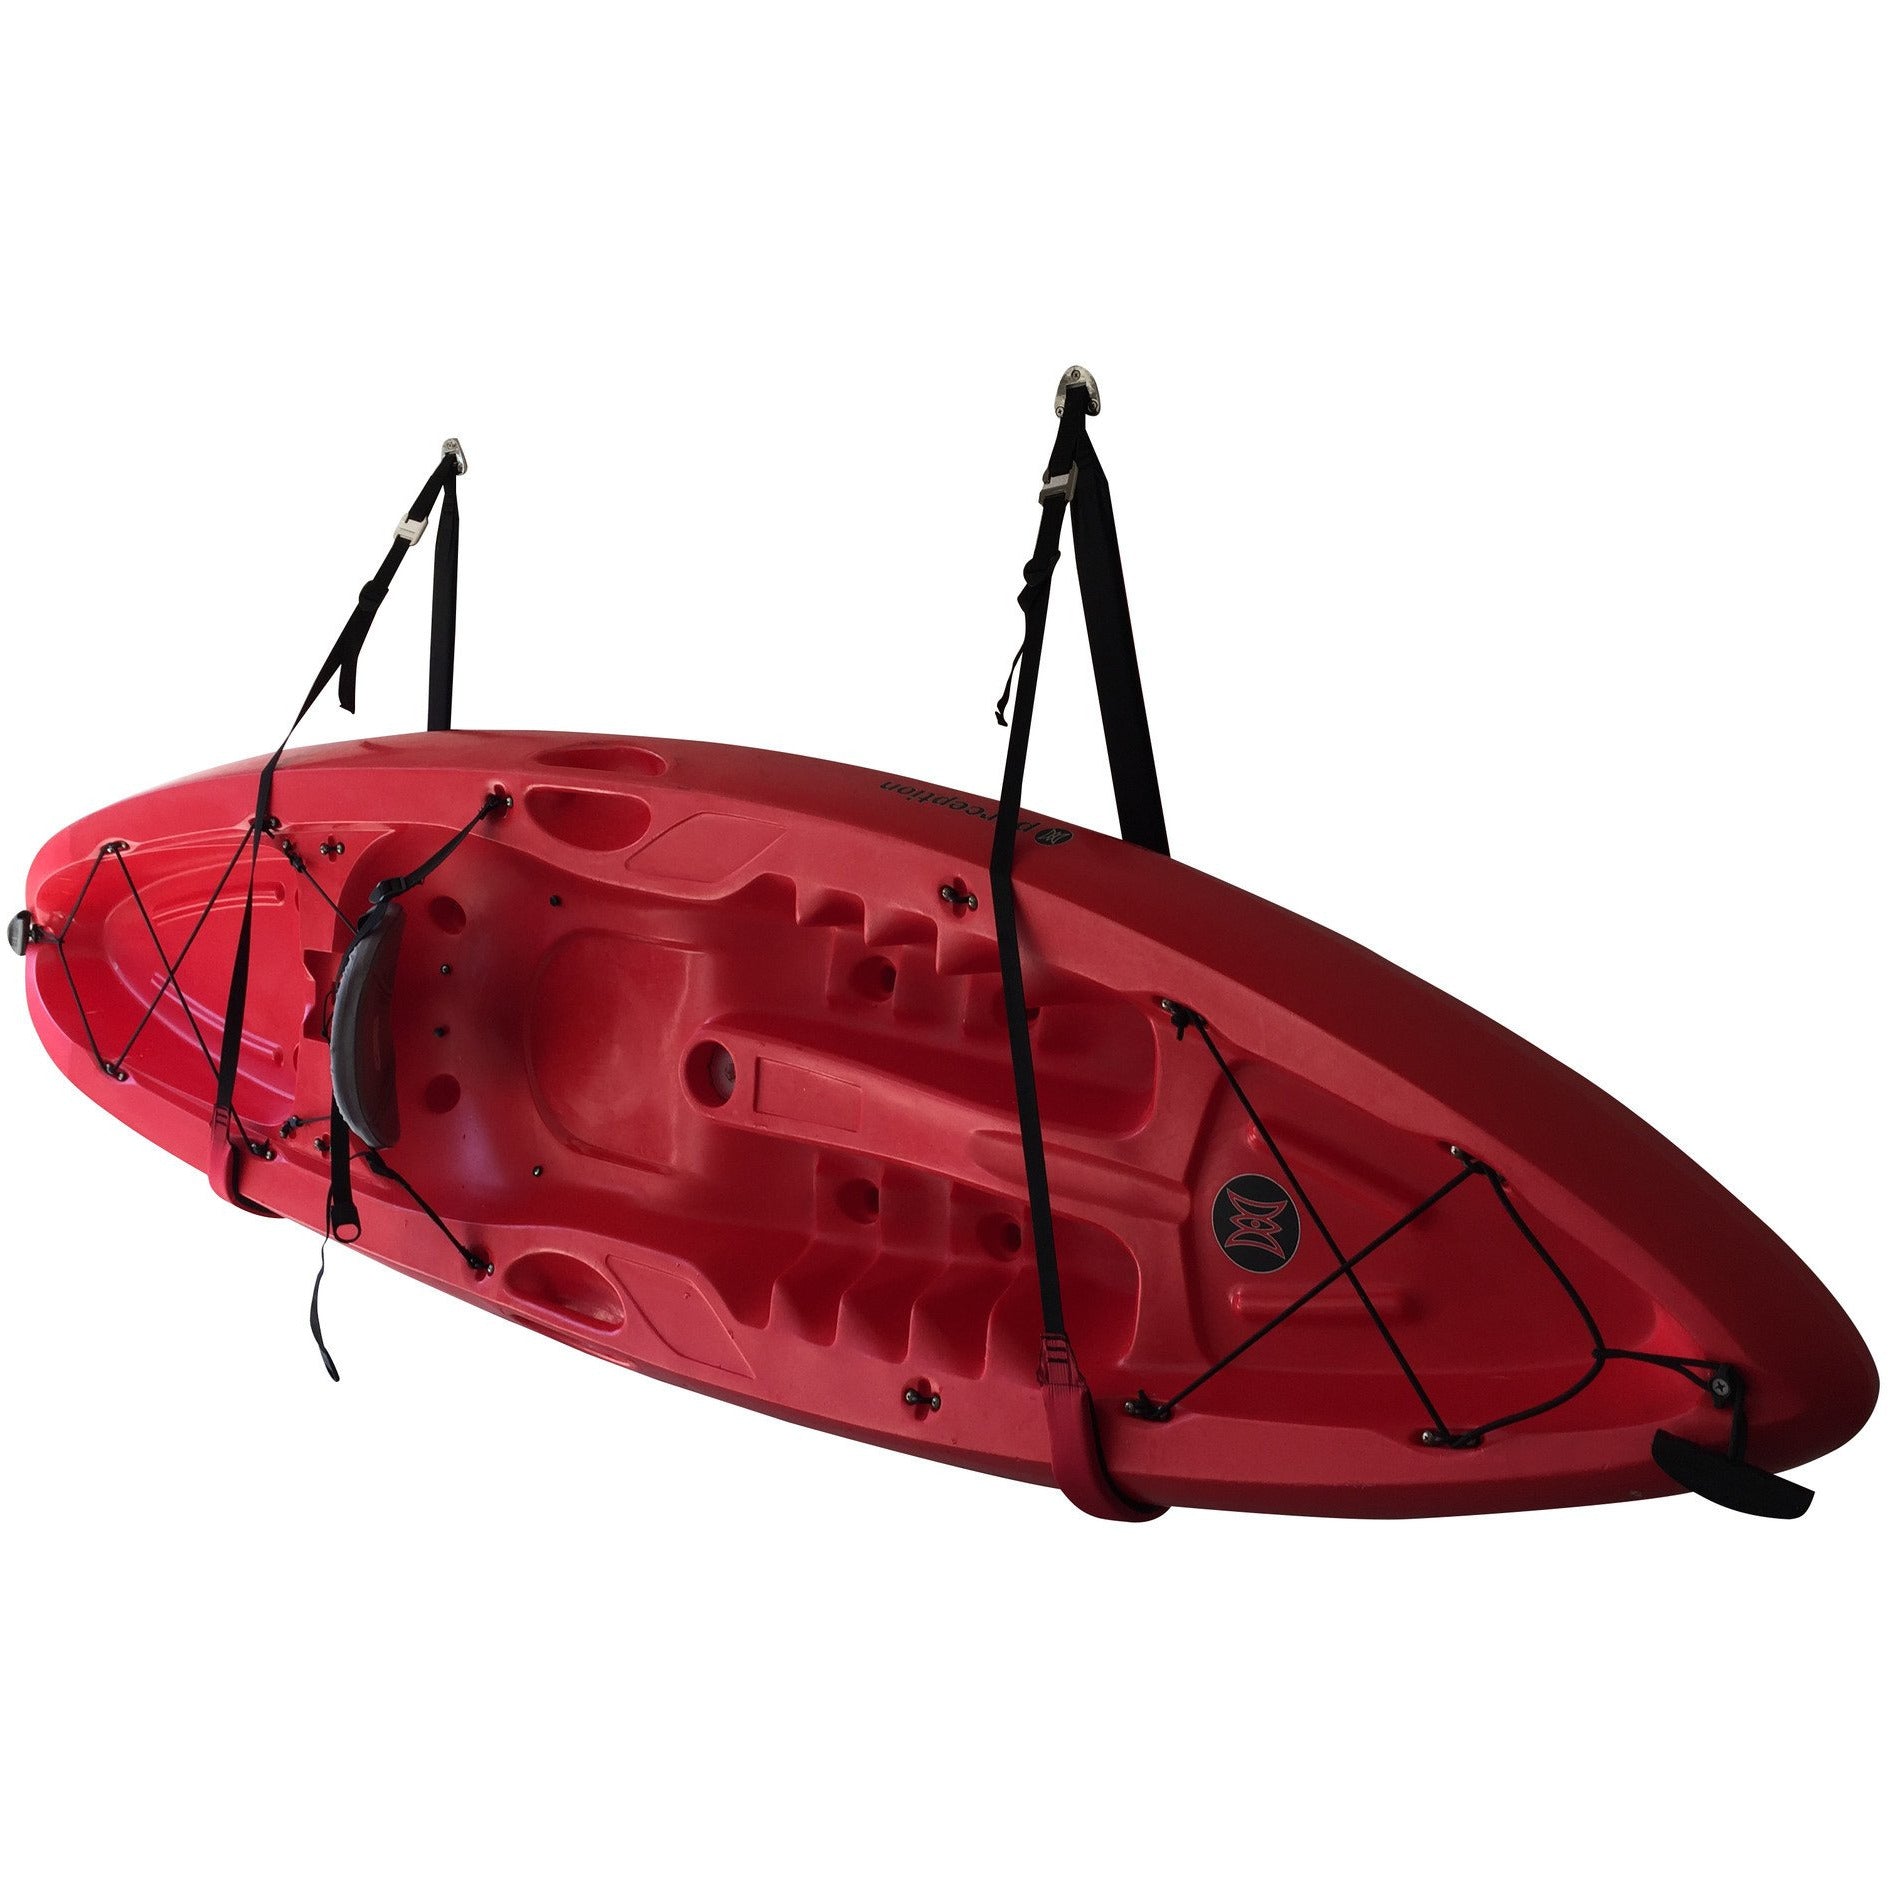 Kayak or Paddleboard Wall Storage Sling | Adjustable Wall Mount